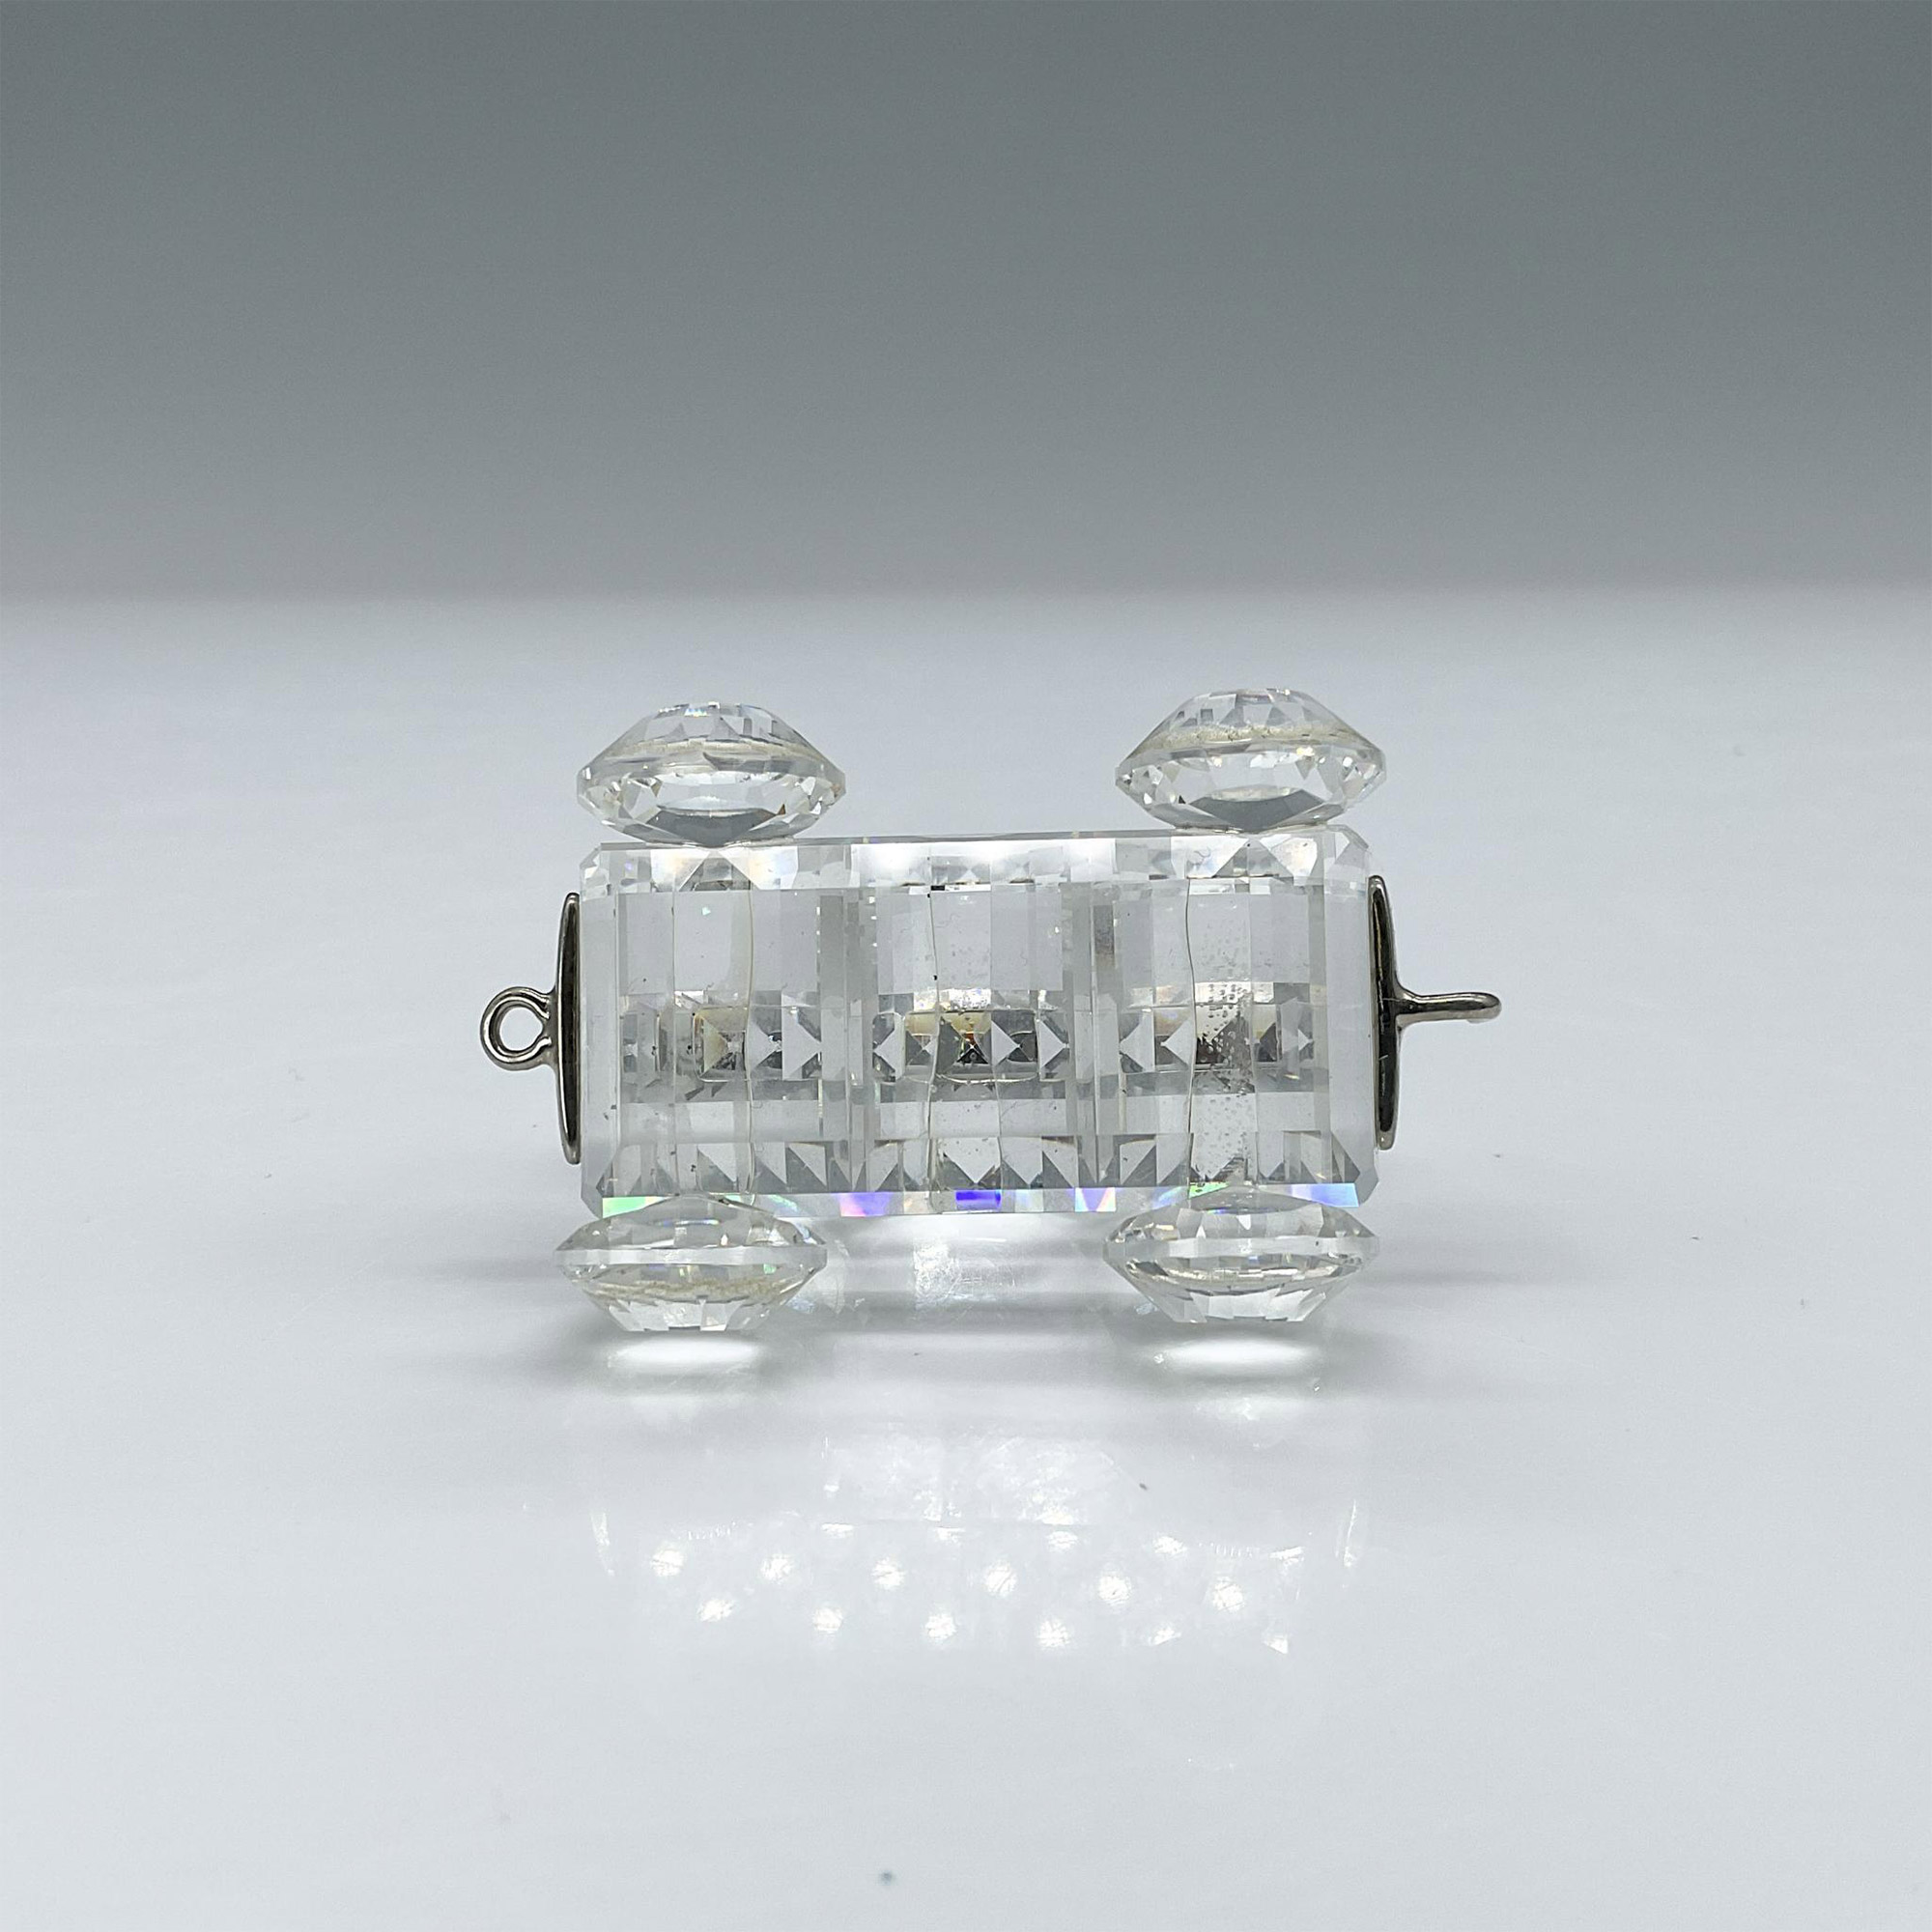 Swarovski Crystal Figurine, Petrol Wagon - Image 3 of 4